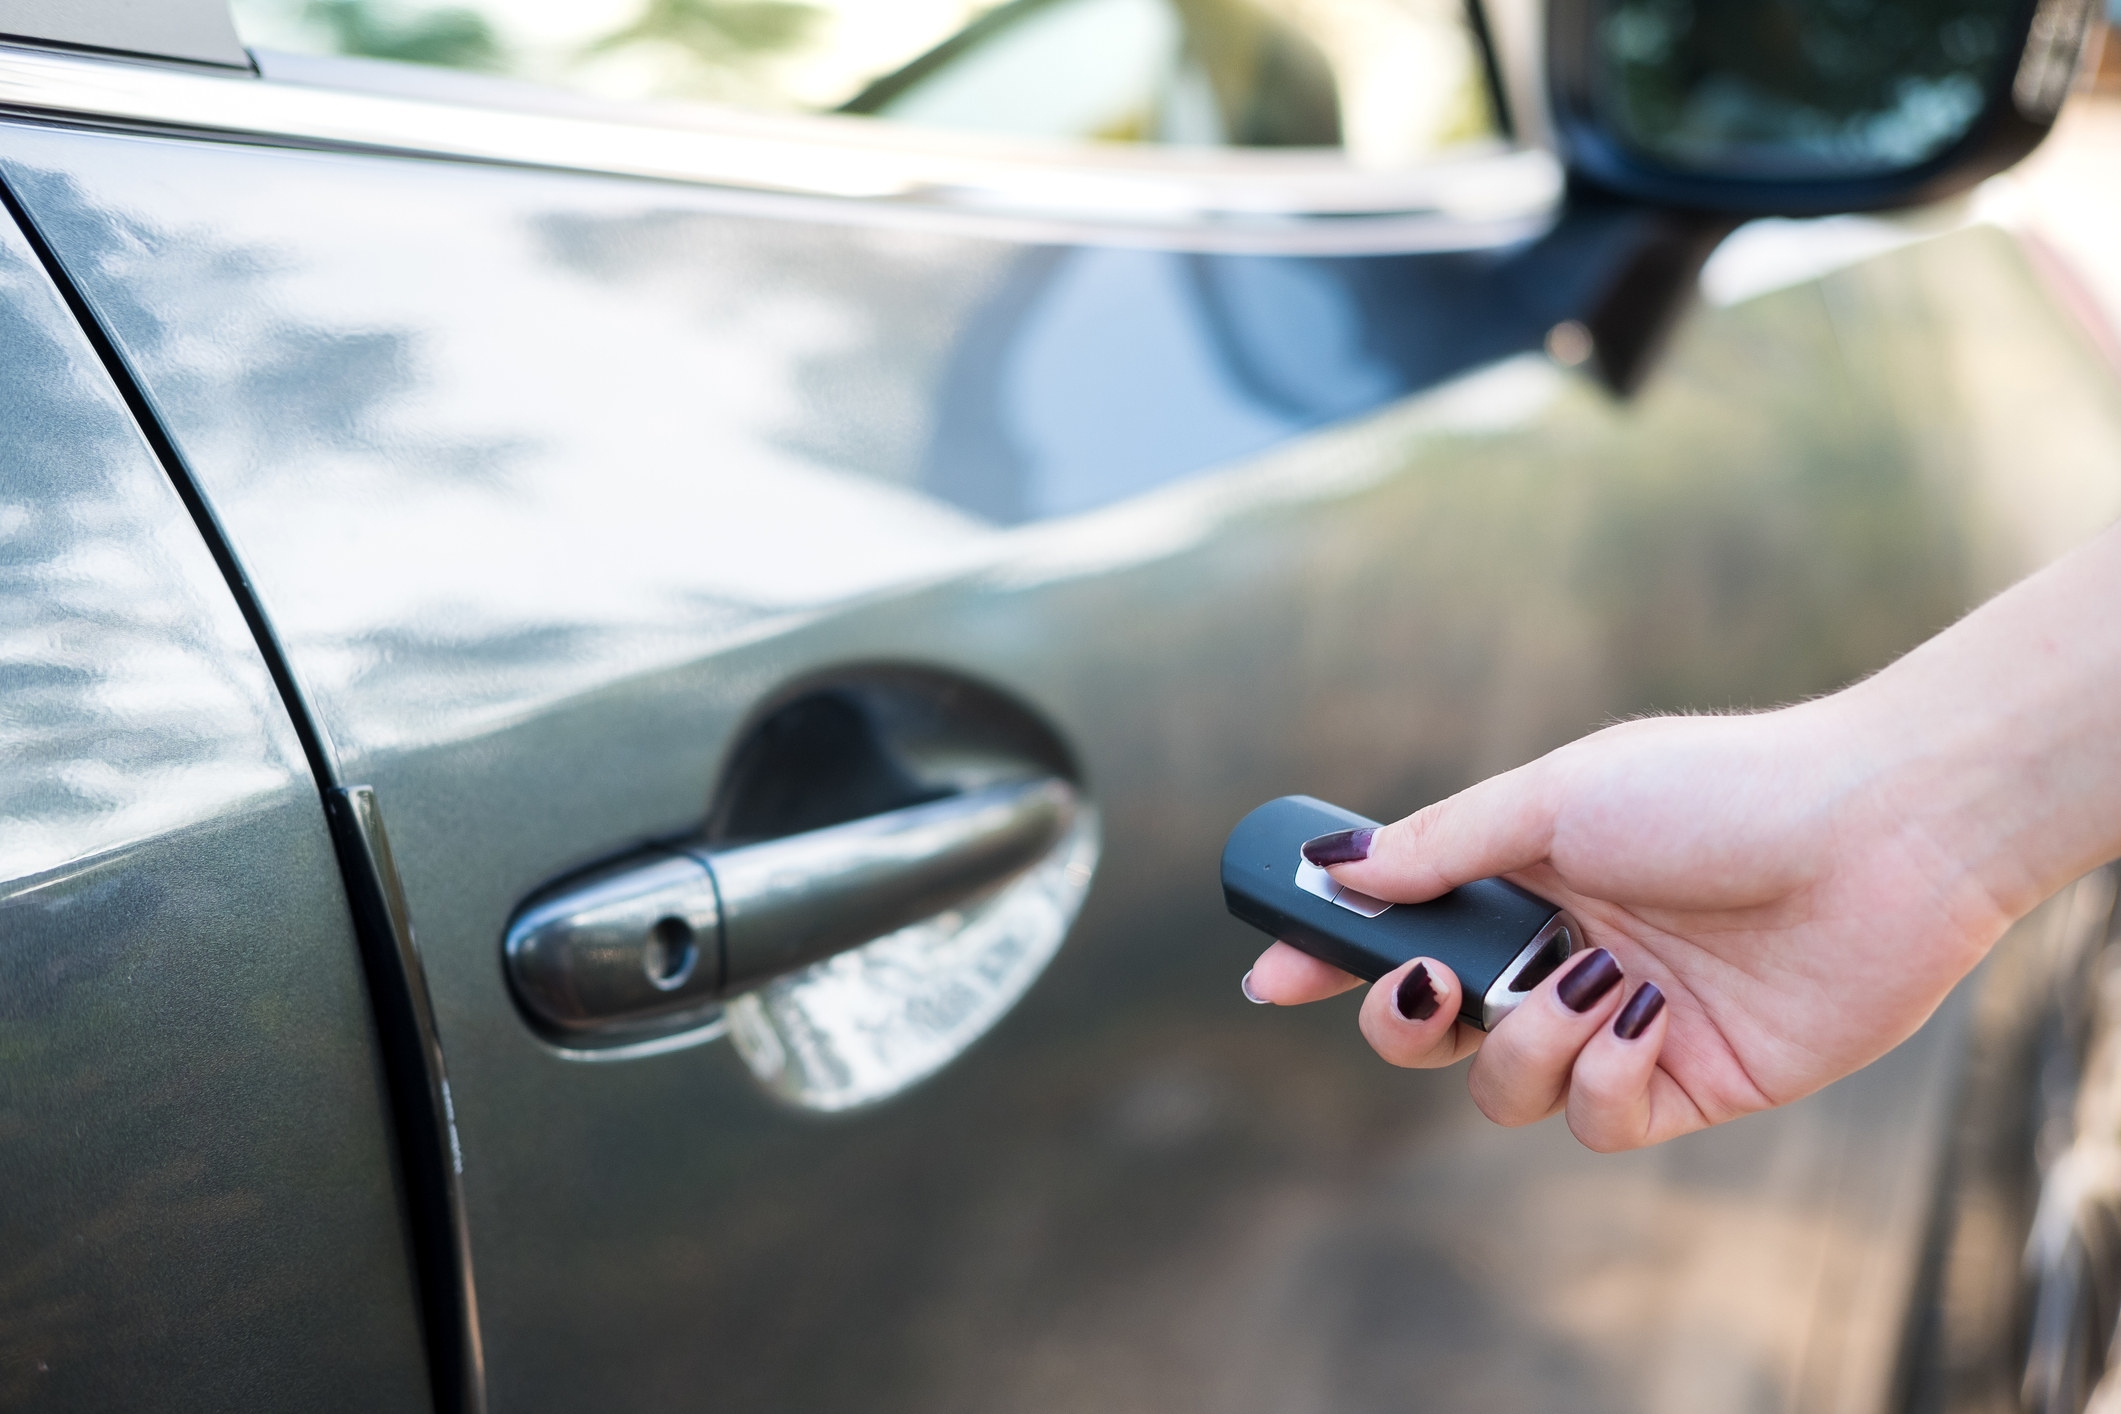 A woman unlocks her car with a key